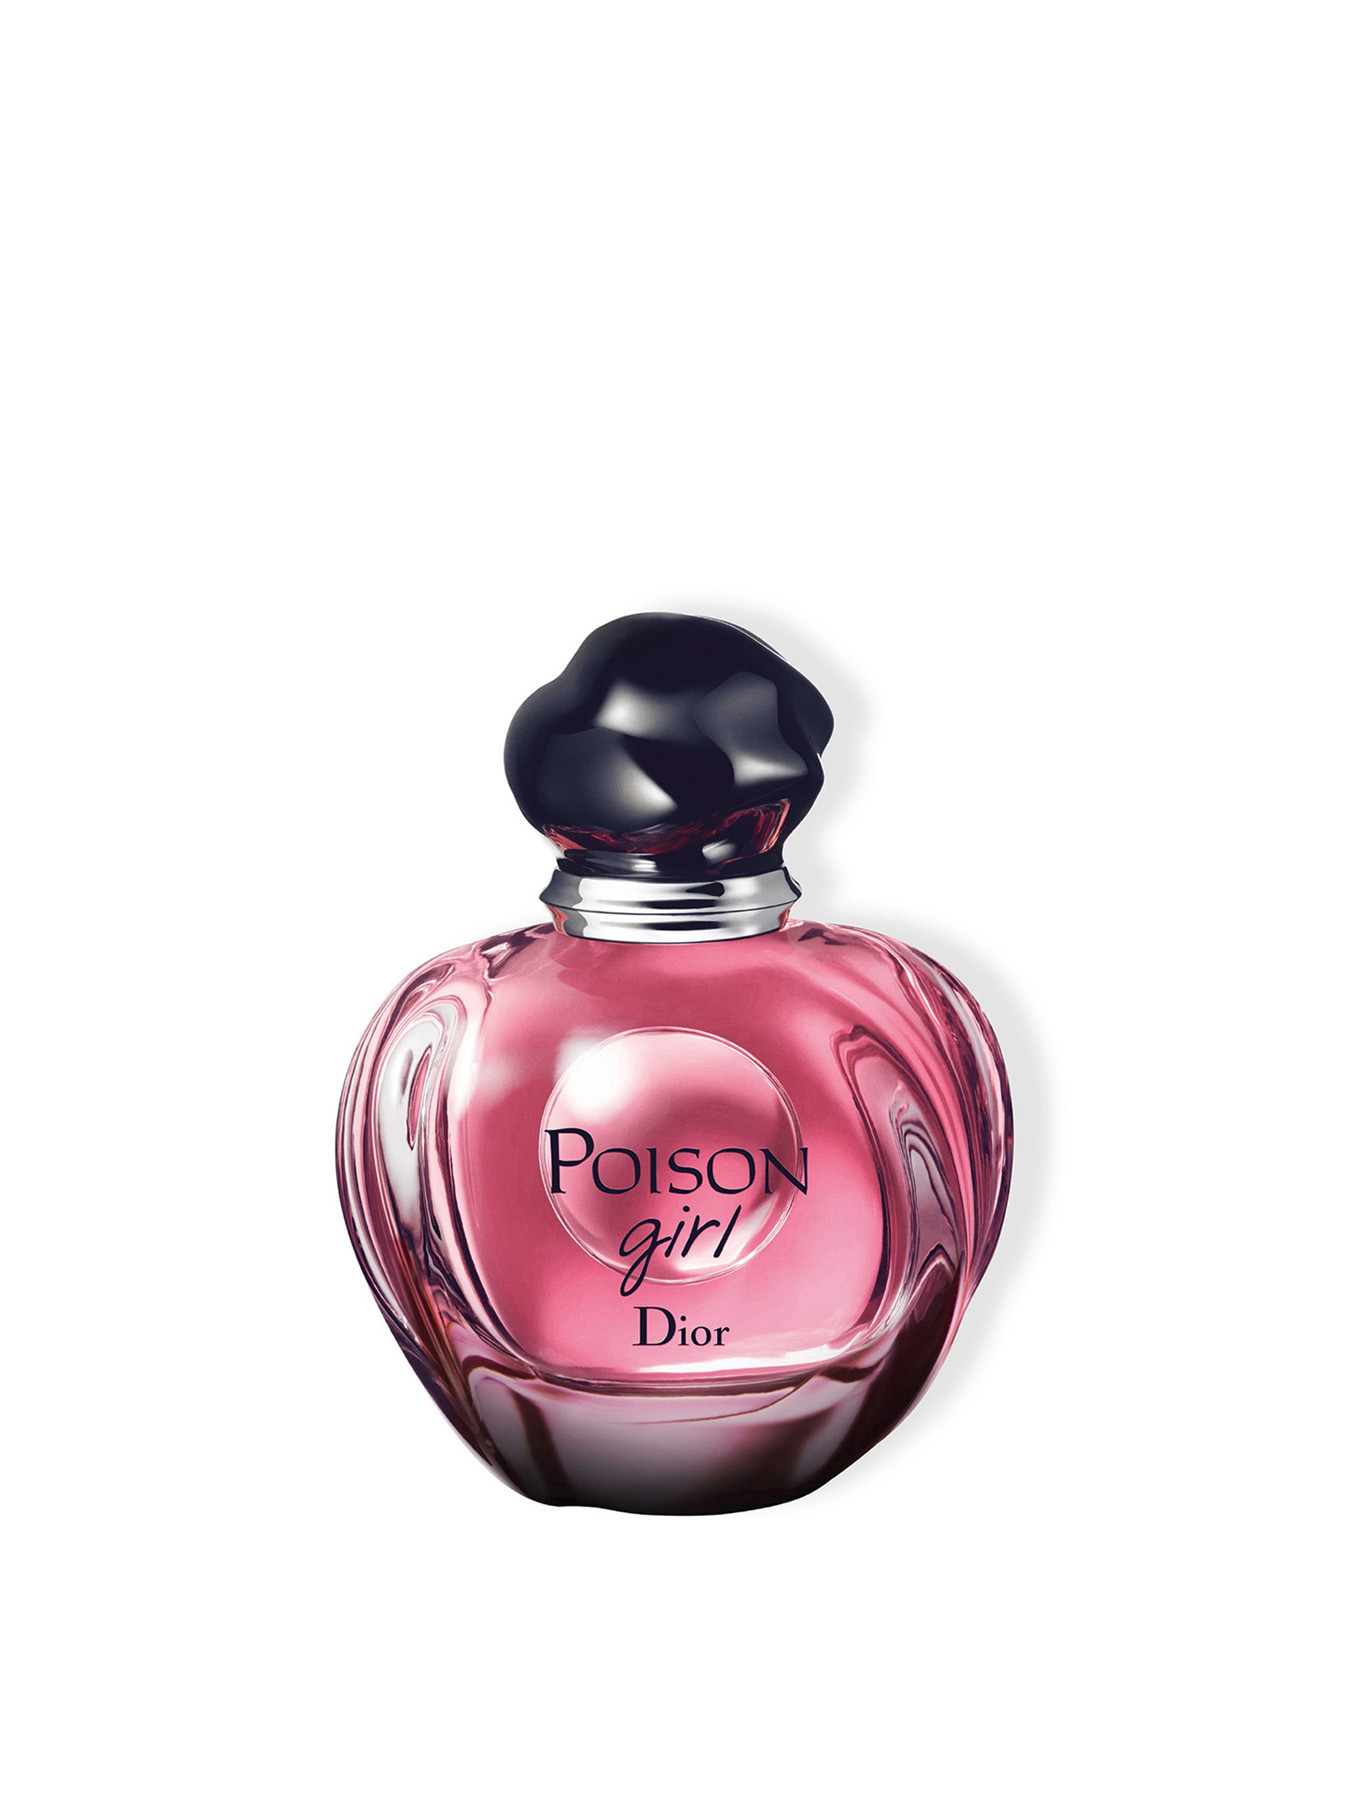 DIOR Poison Girl Eau de Parfum 30ml | Fenwick